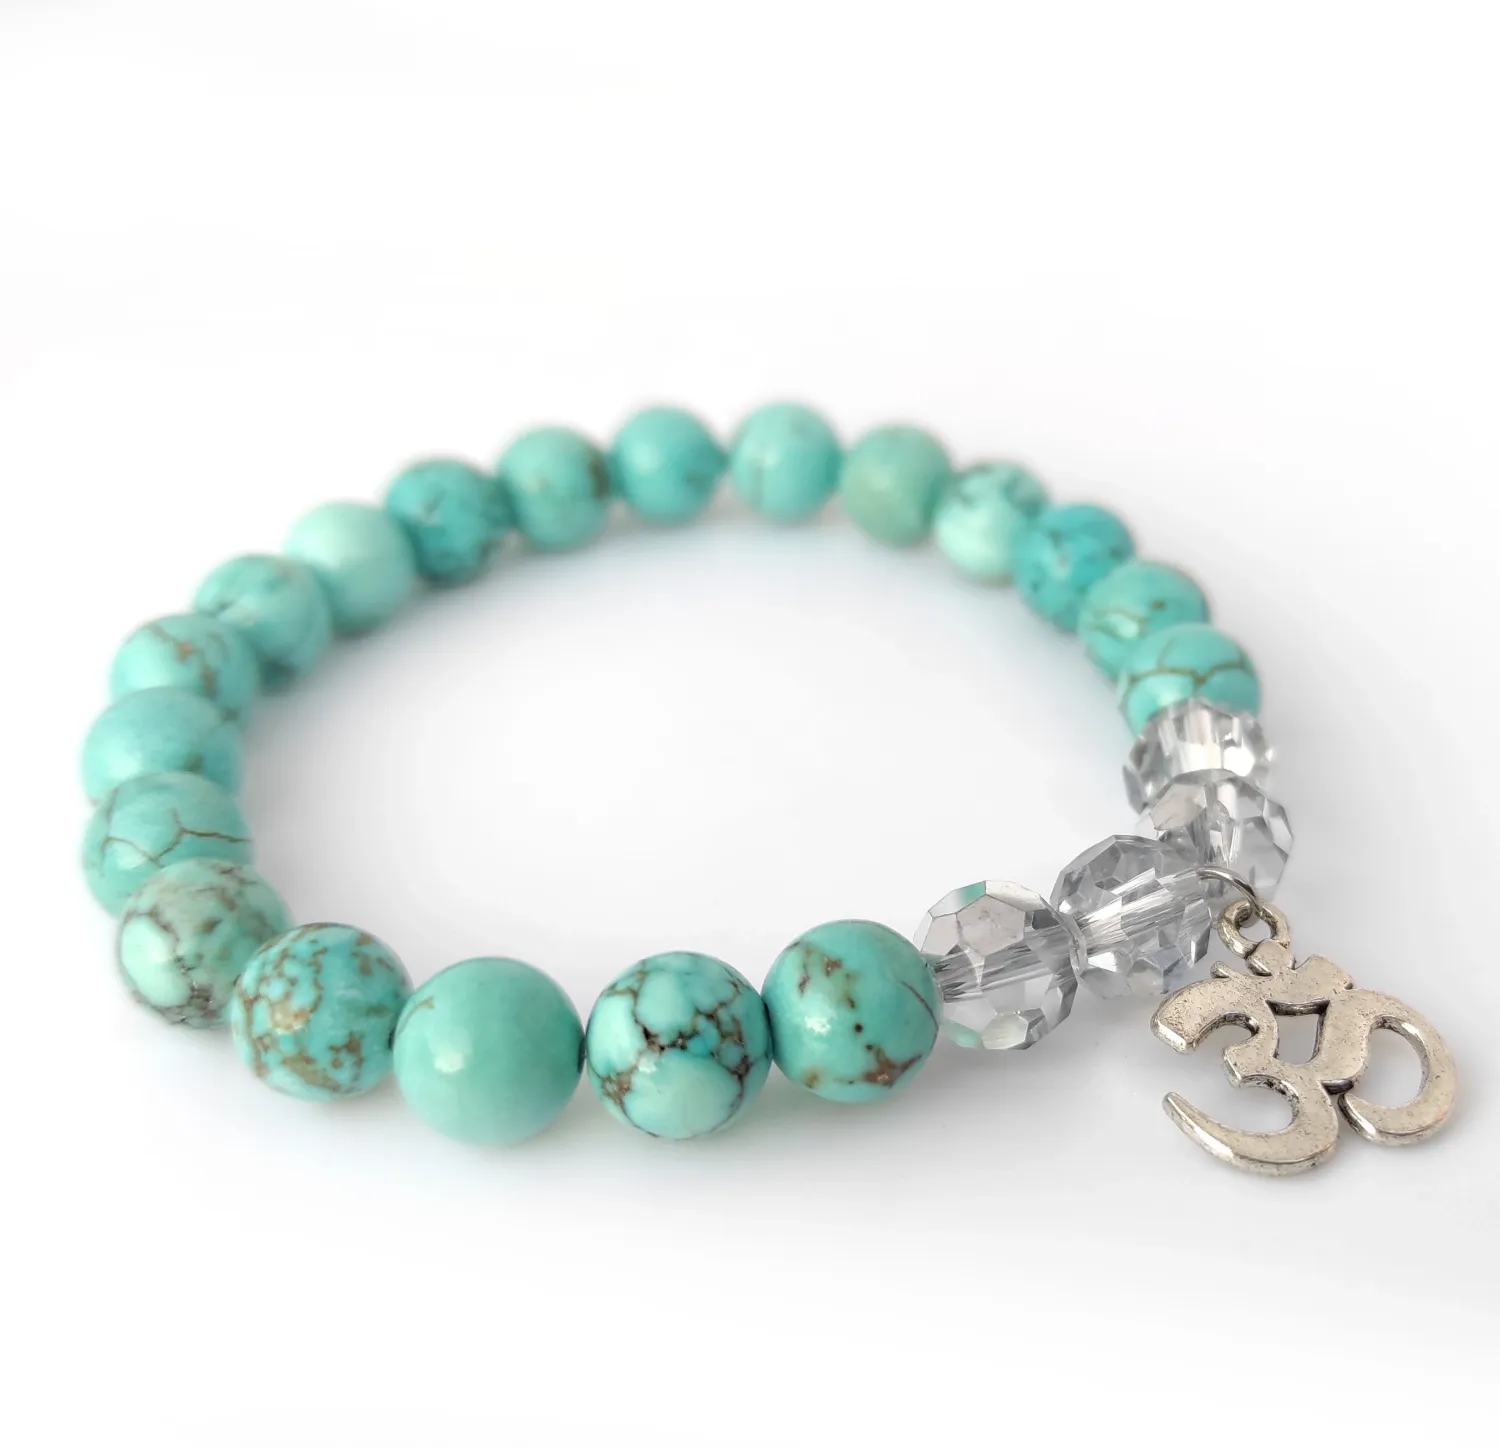 Turquoise gemstone with Aum (Om) Charm bracelet